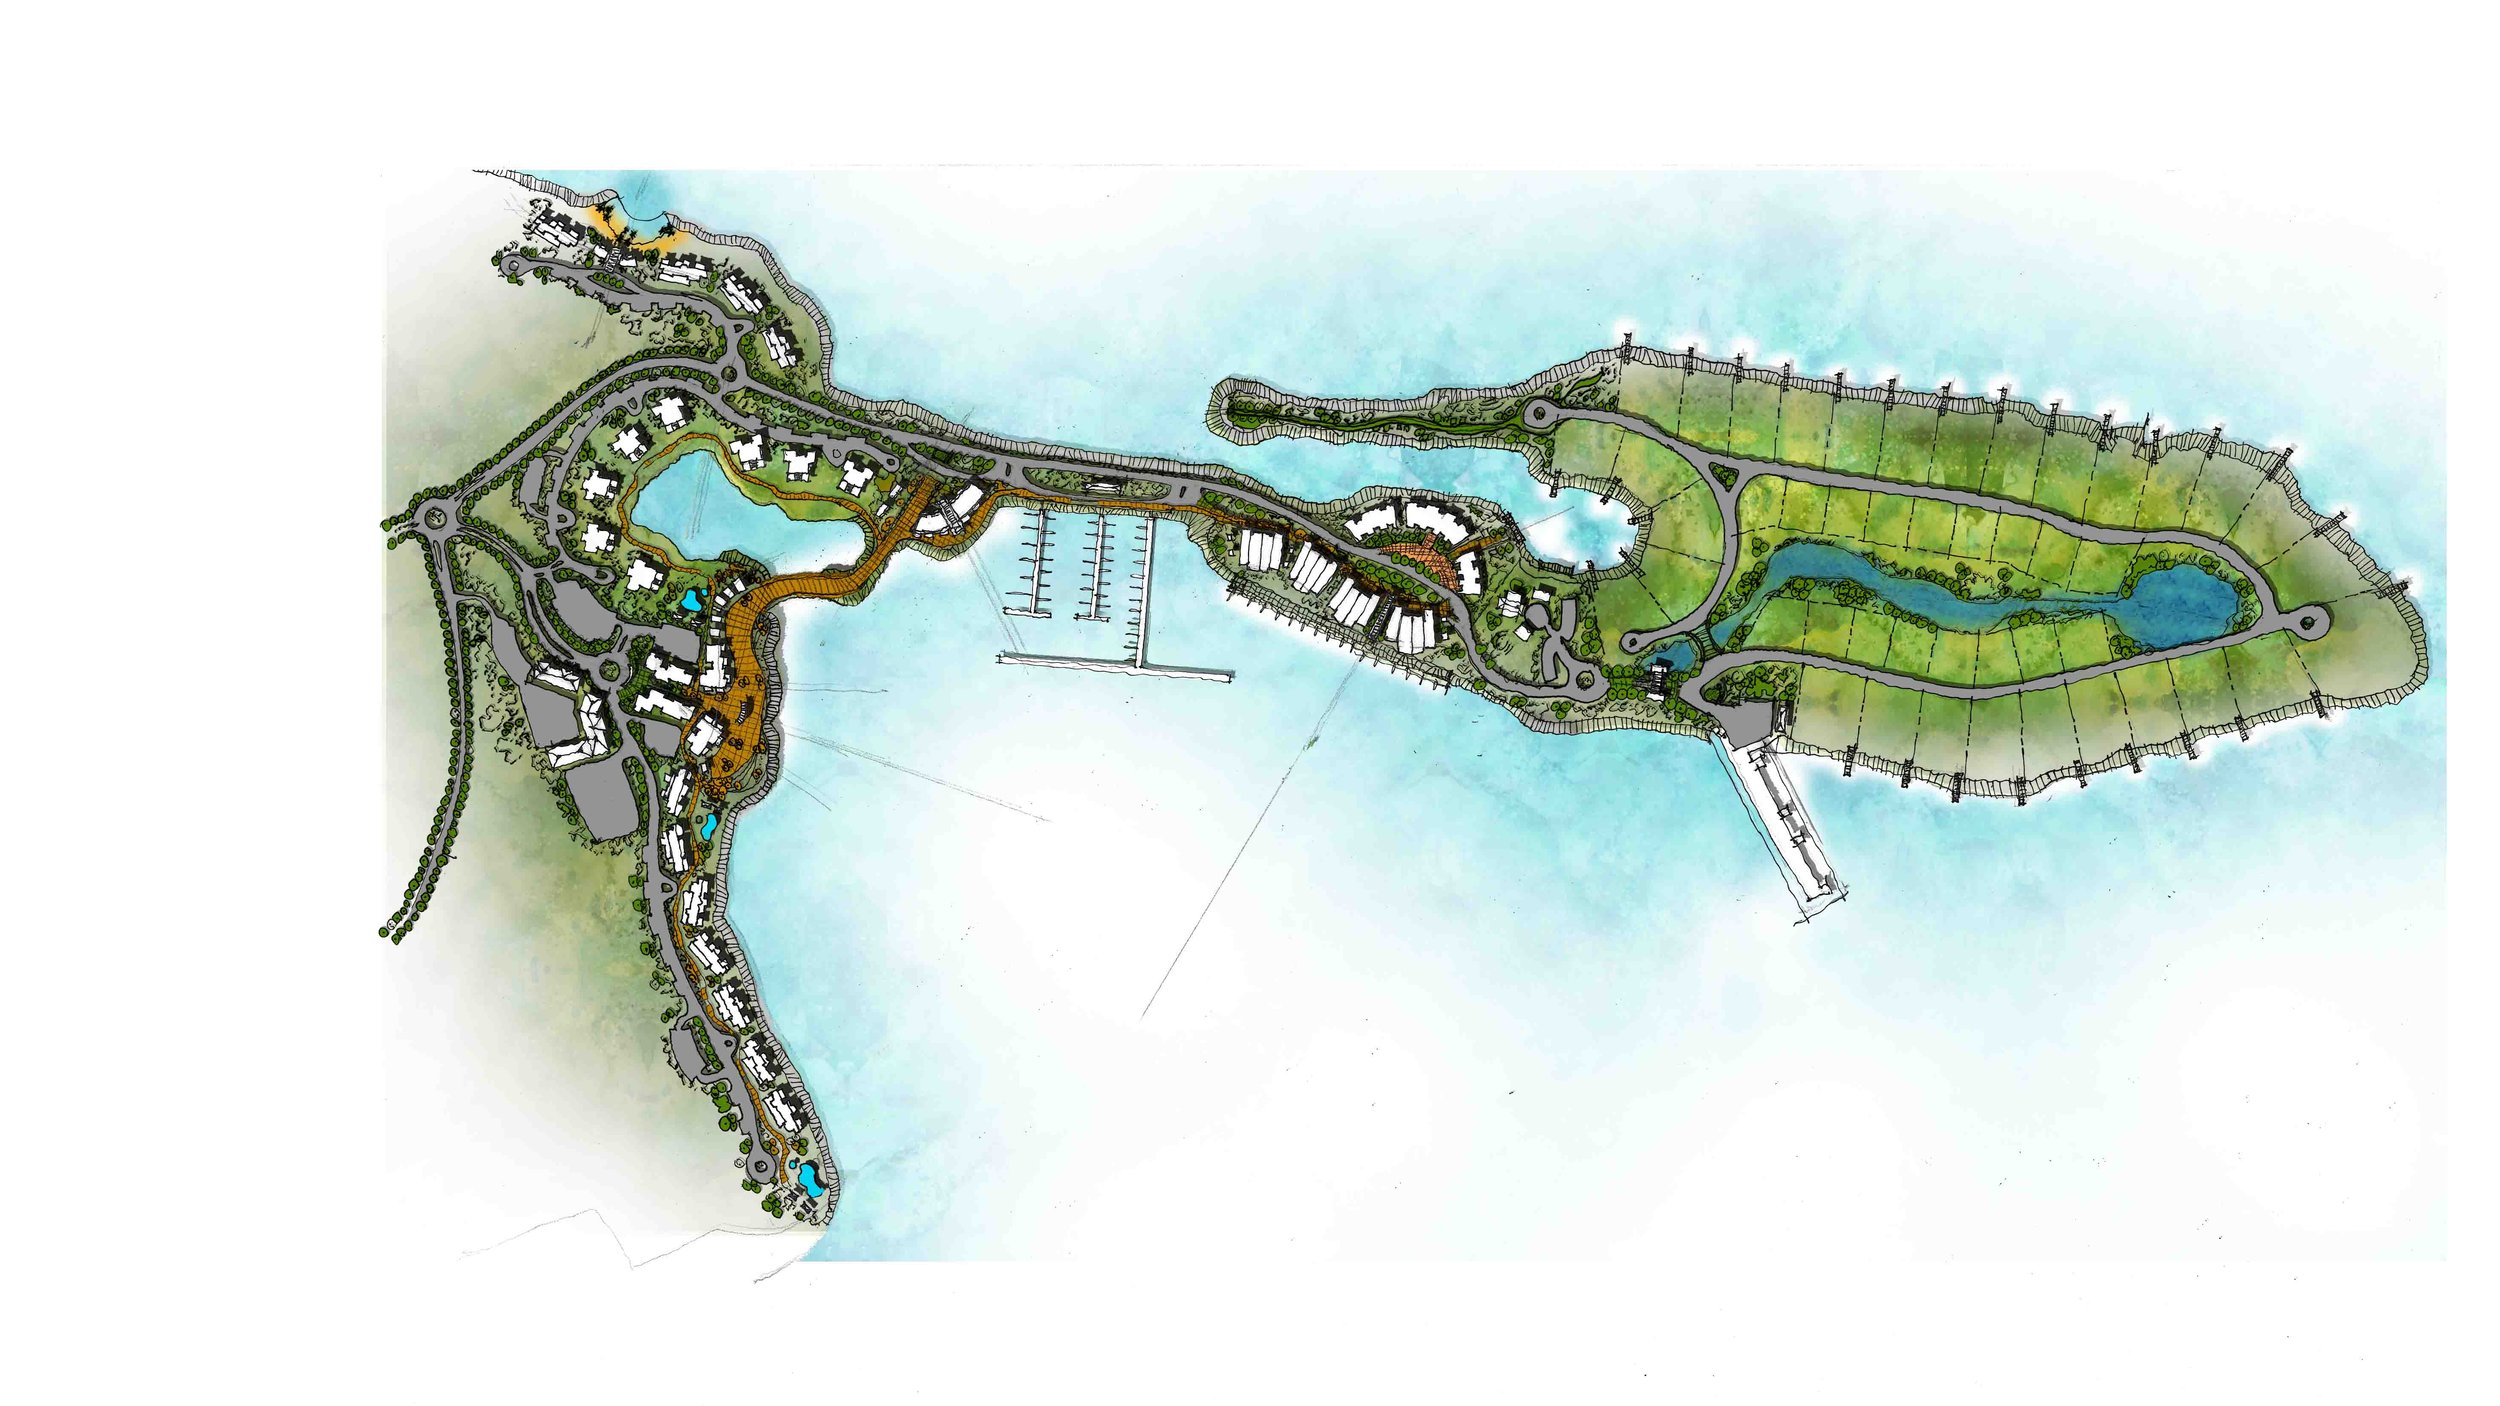  Bermuda Redevelopment project master plan. 